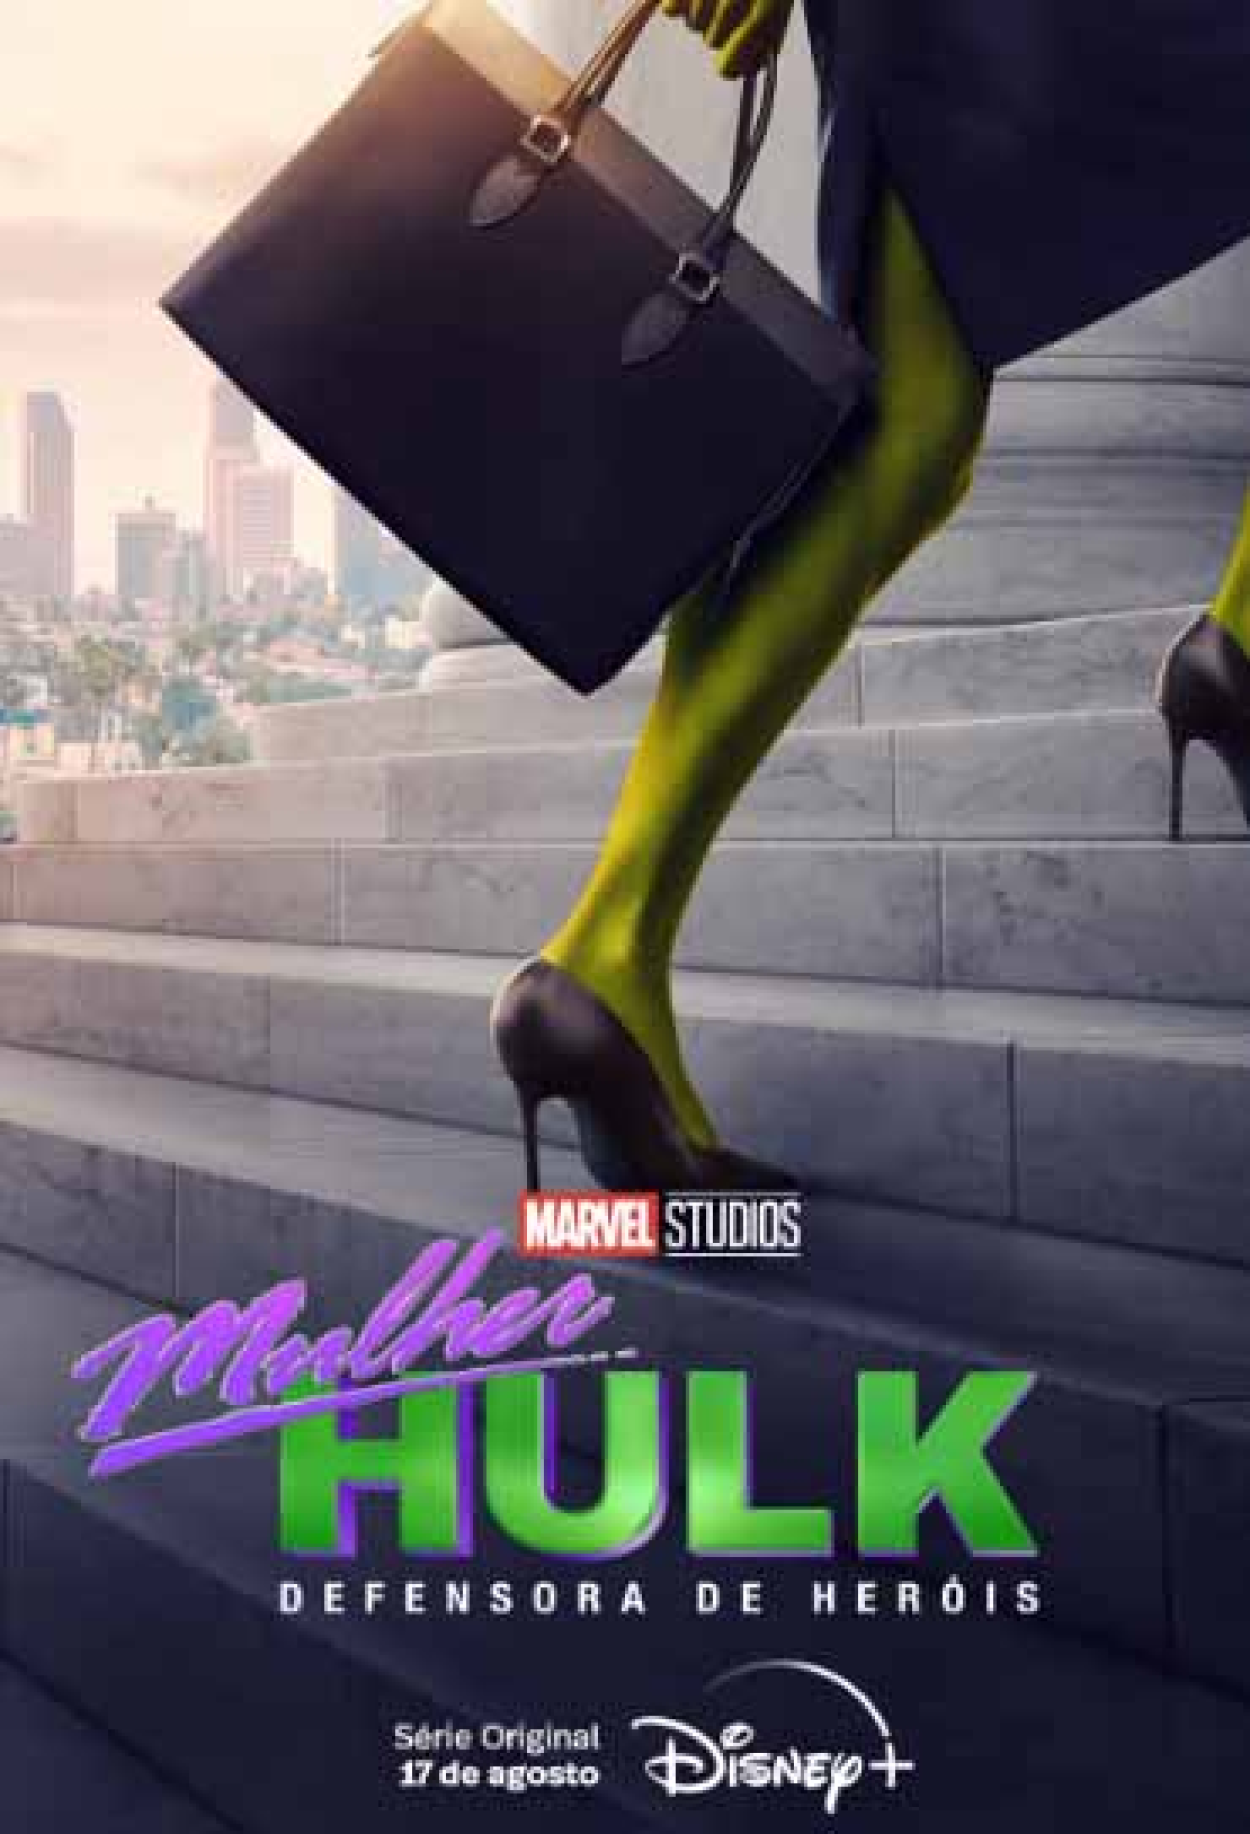 She-Hulk (Série), Sinopse, Trailers e Curiosidades - Cinema10